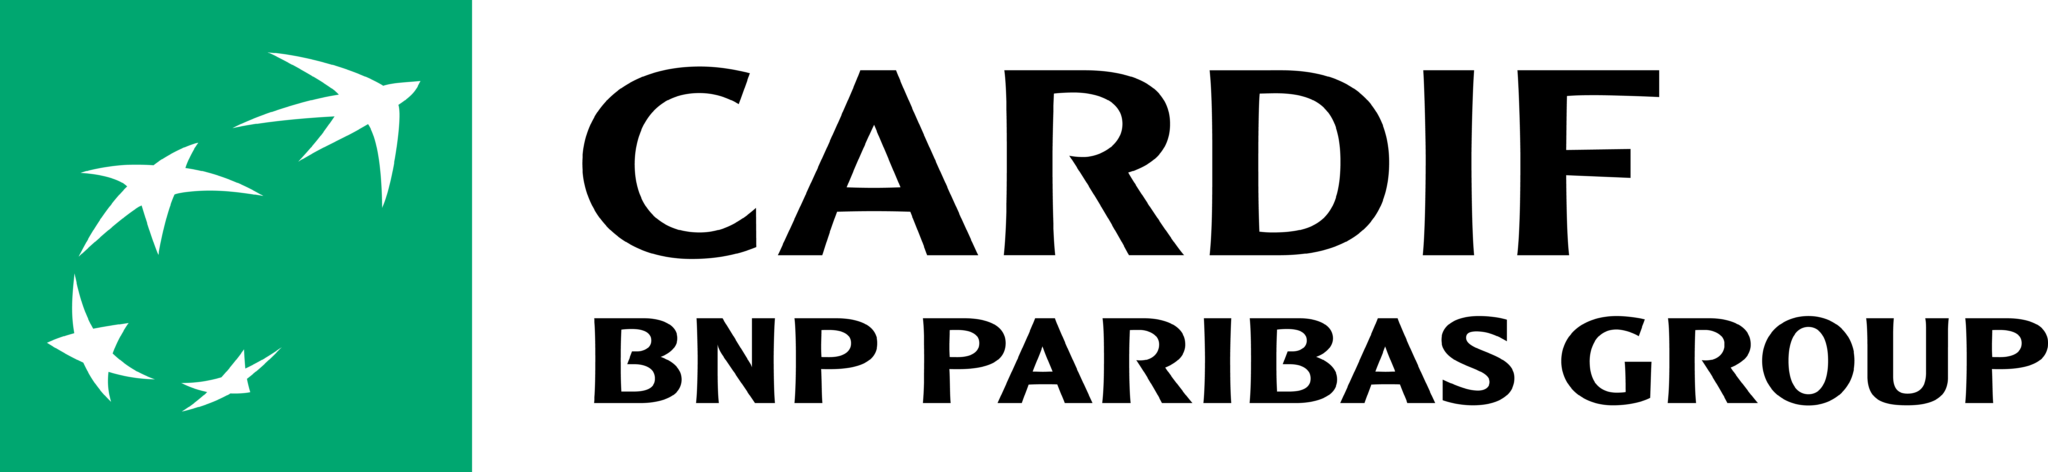 cardif-bnp-paribas-group-logo-vector-2048x472-1